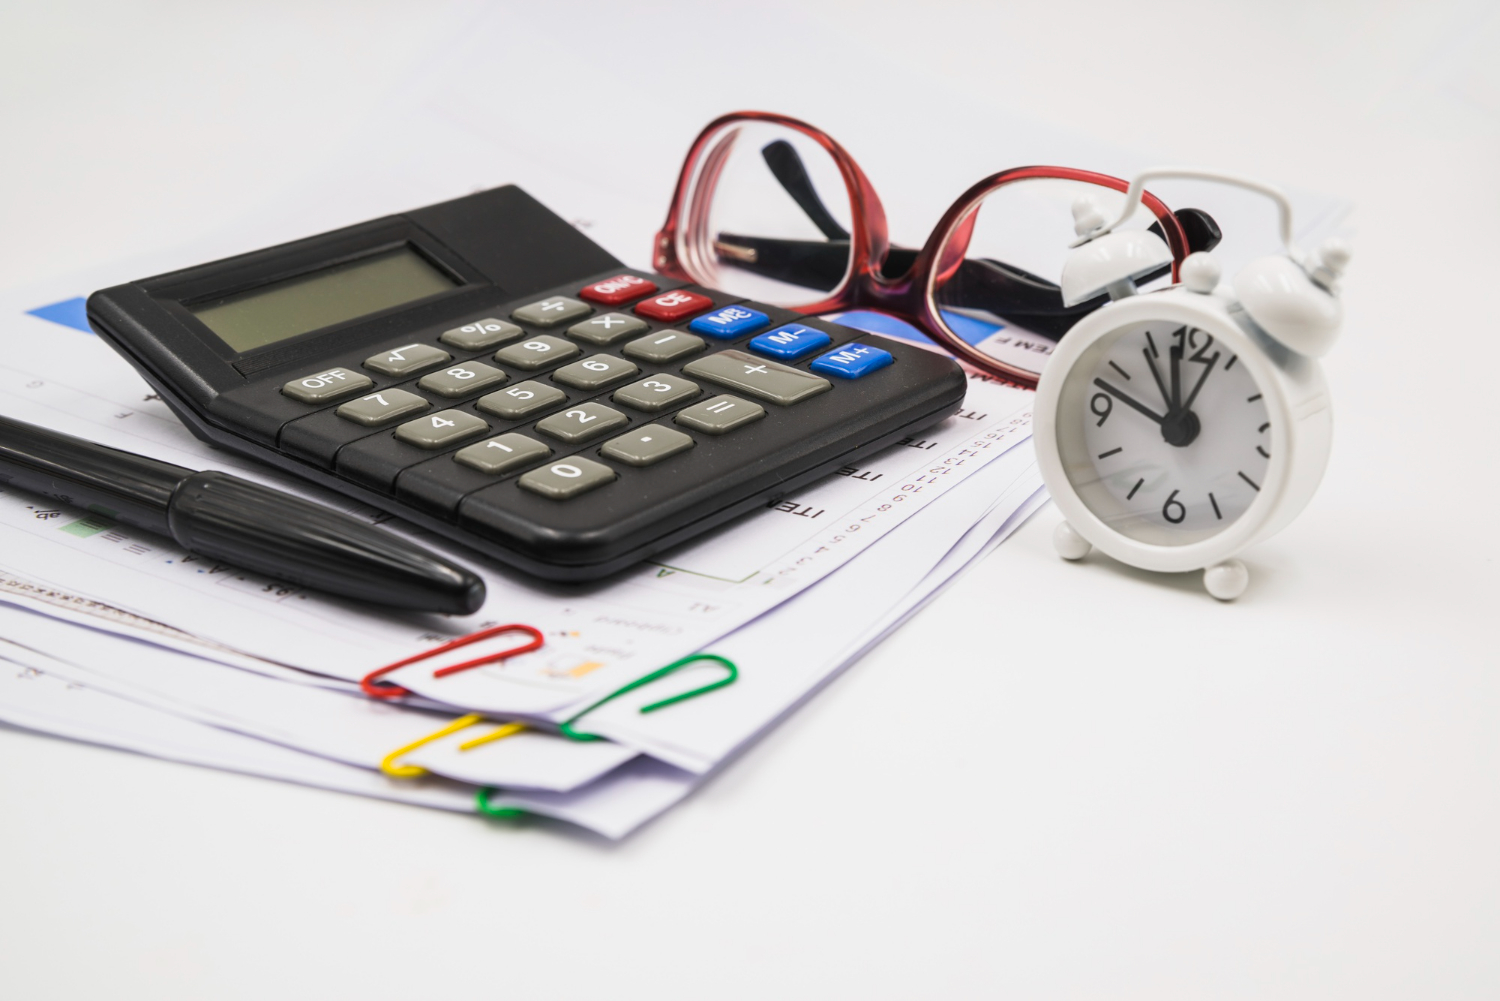 EMI and Two-Wheeler Loan Calculator